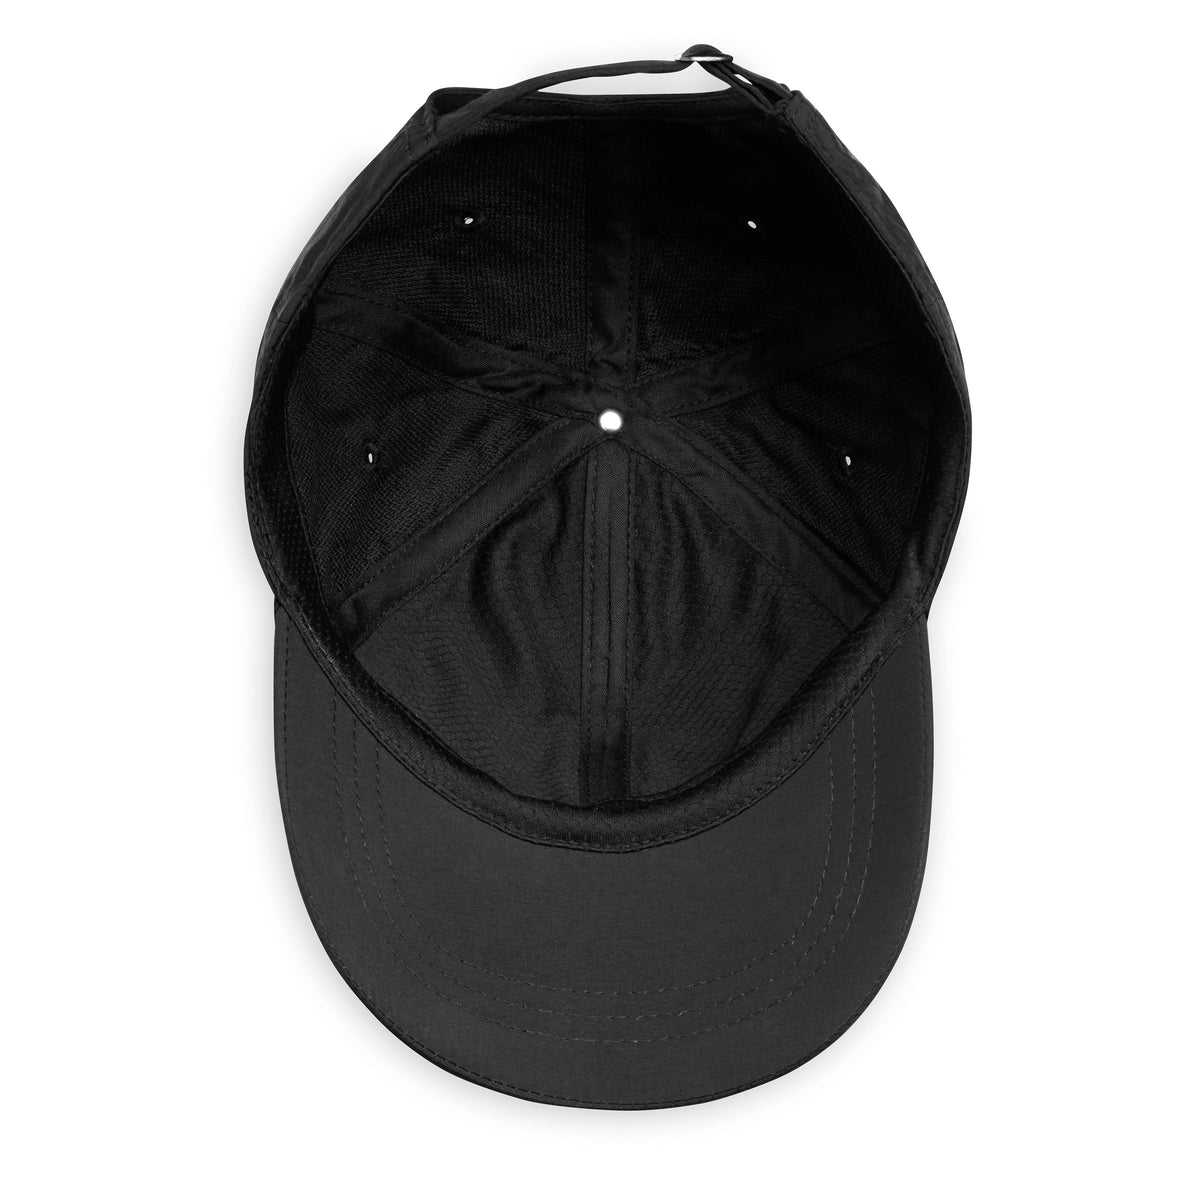 Classic Solara UV Protection Fitness Hat black inside